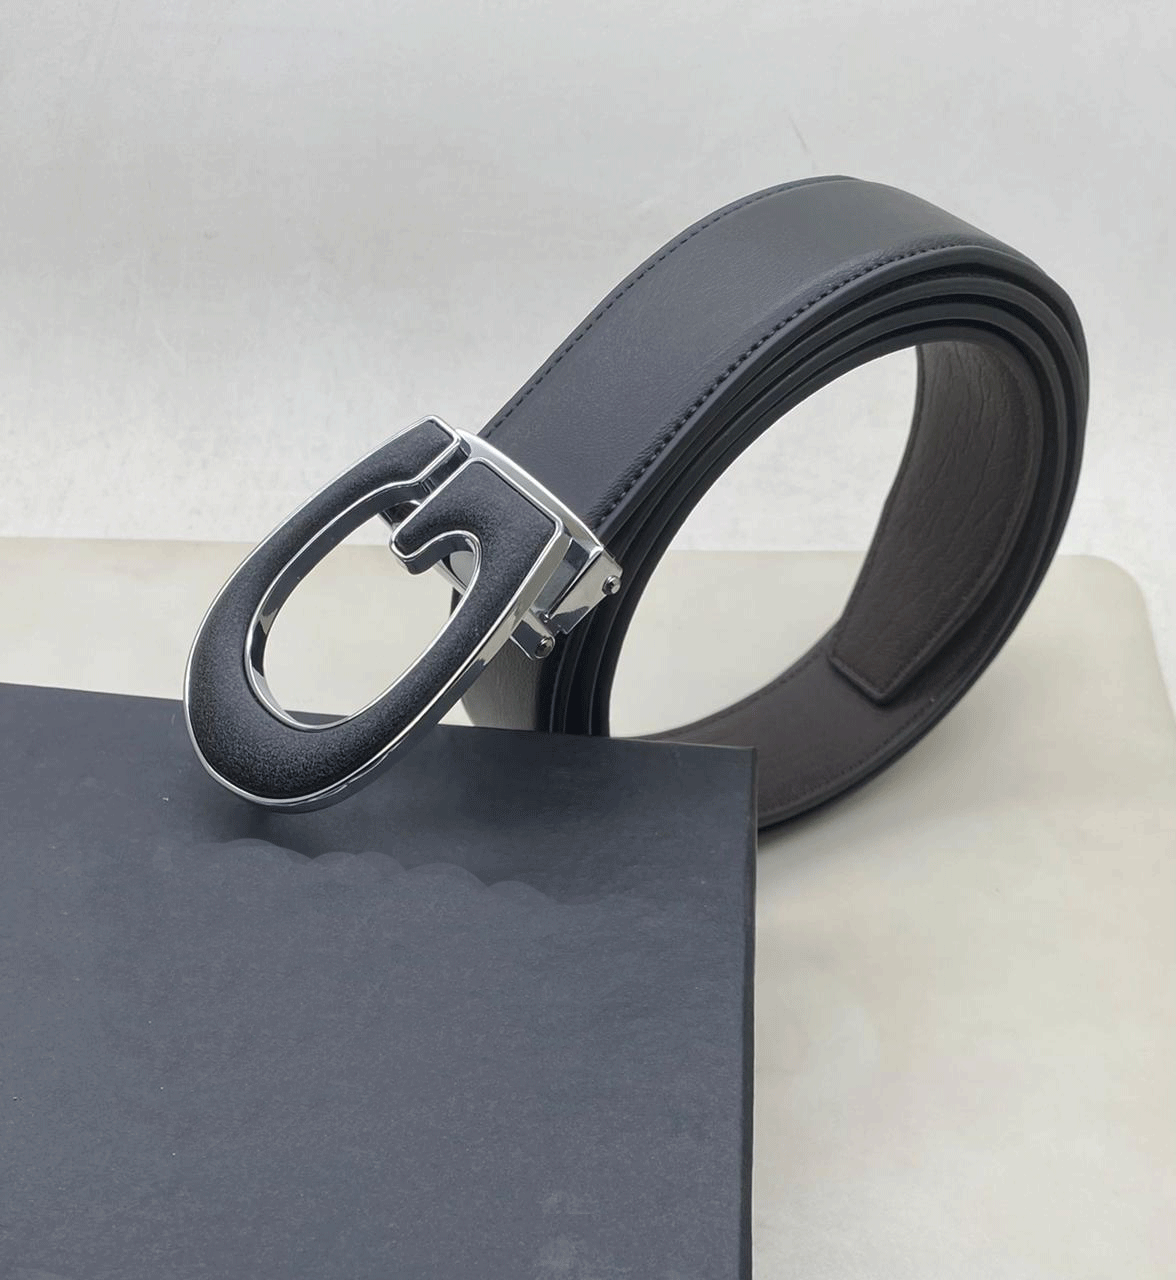 Hot Designer Trendy Luxury Genuine Leather Belt For Men's-Unique and Classy